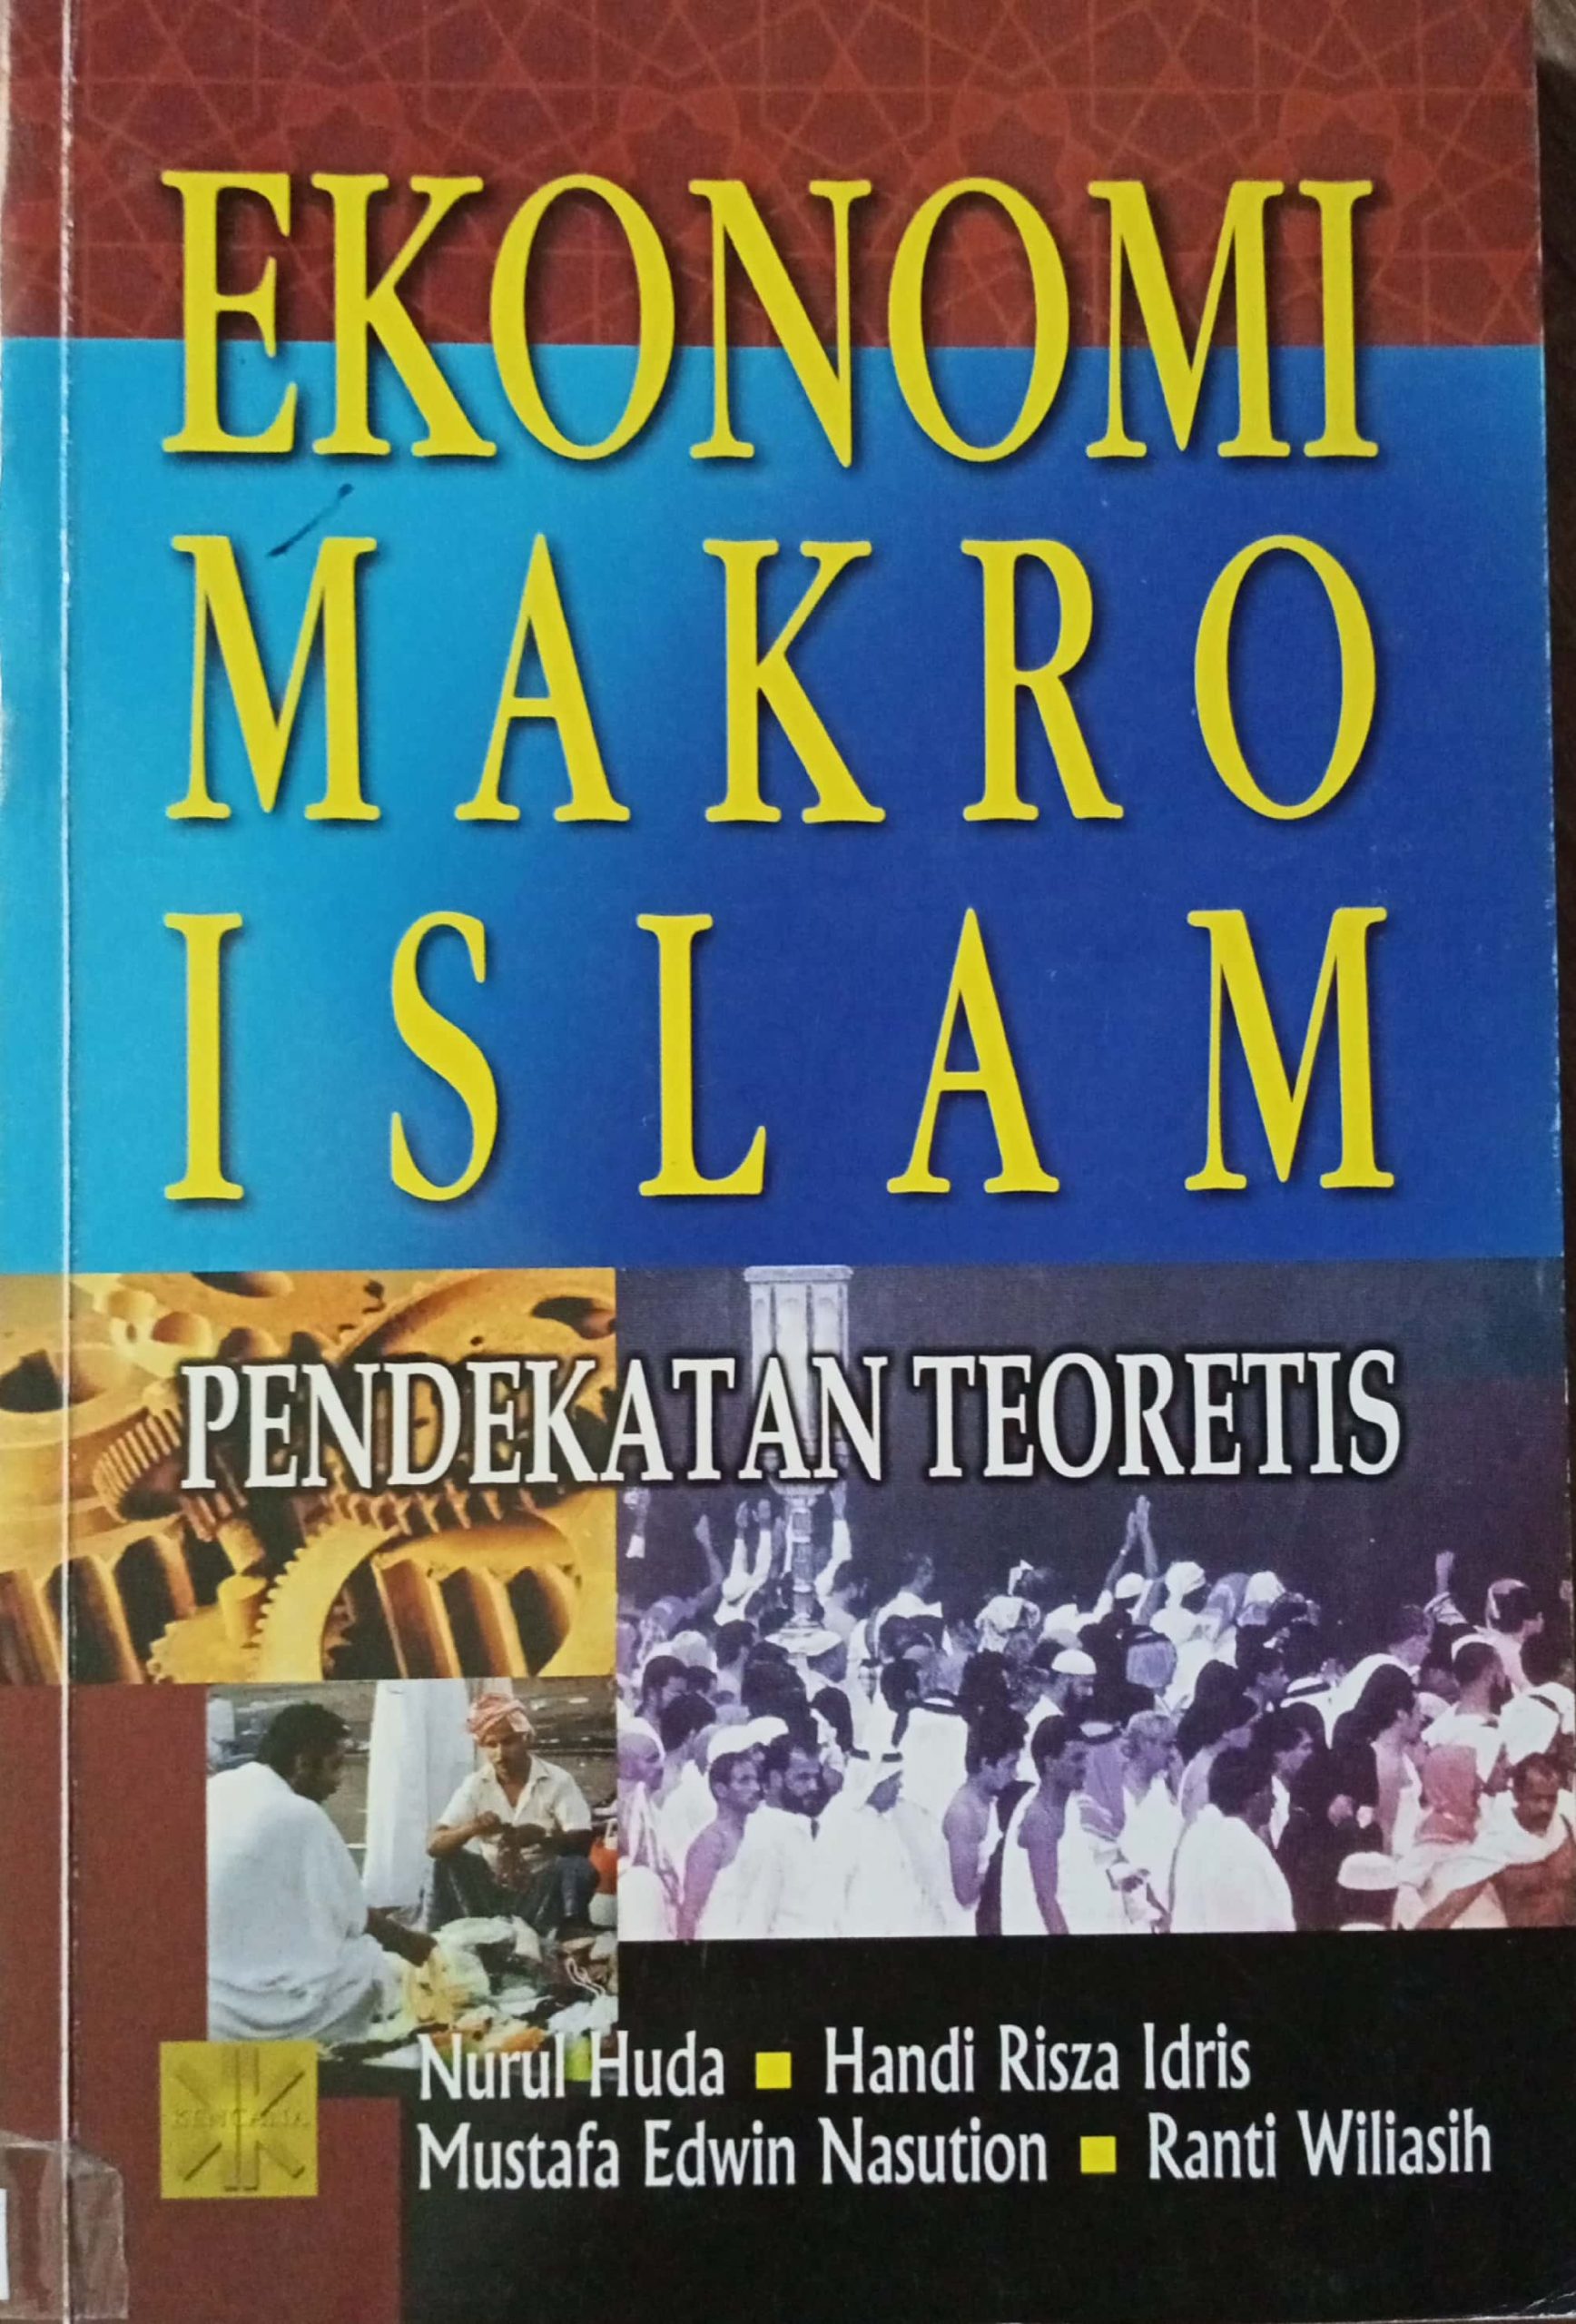 Ekonomi Makro Islam Pendekatan Teoritis  Ekonomi Makro Islam Pendekatan Teoritis 213 scaled  Buku Non Wakaf 213 scaled